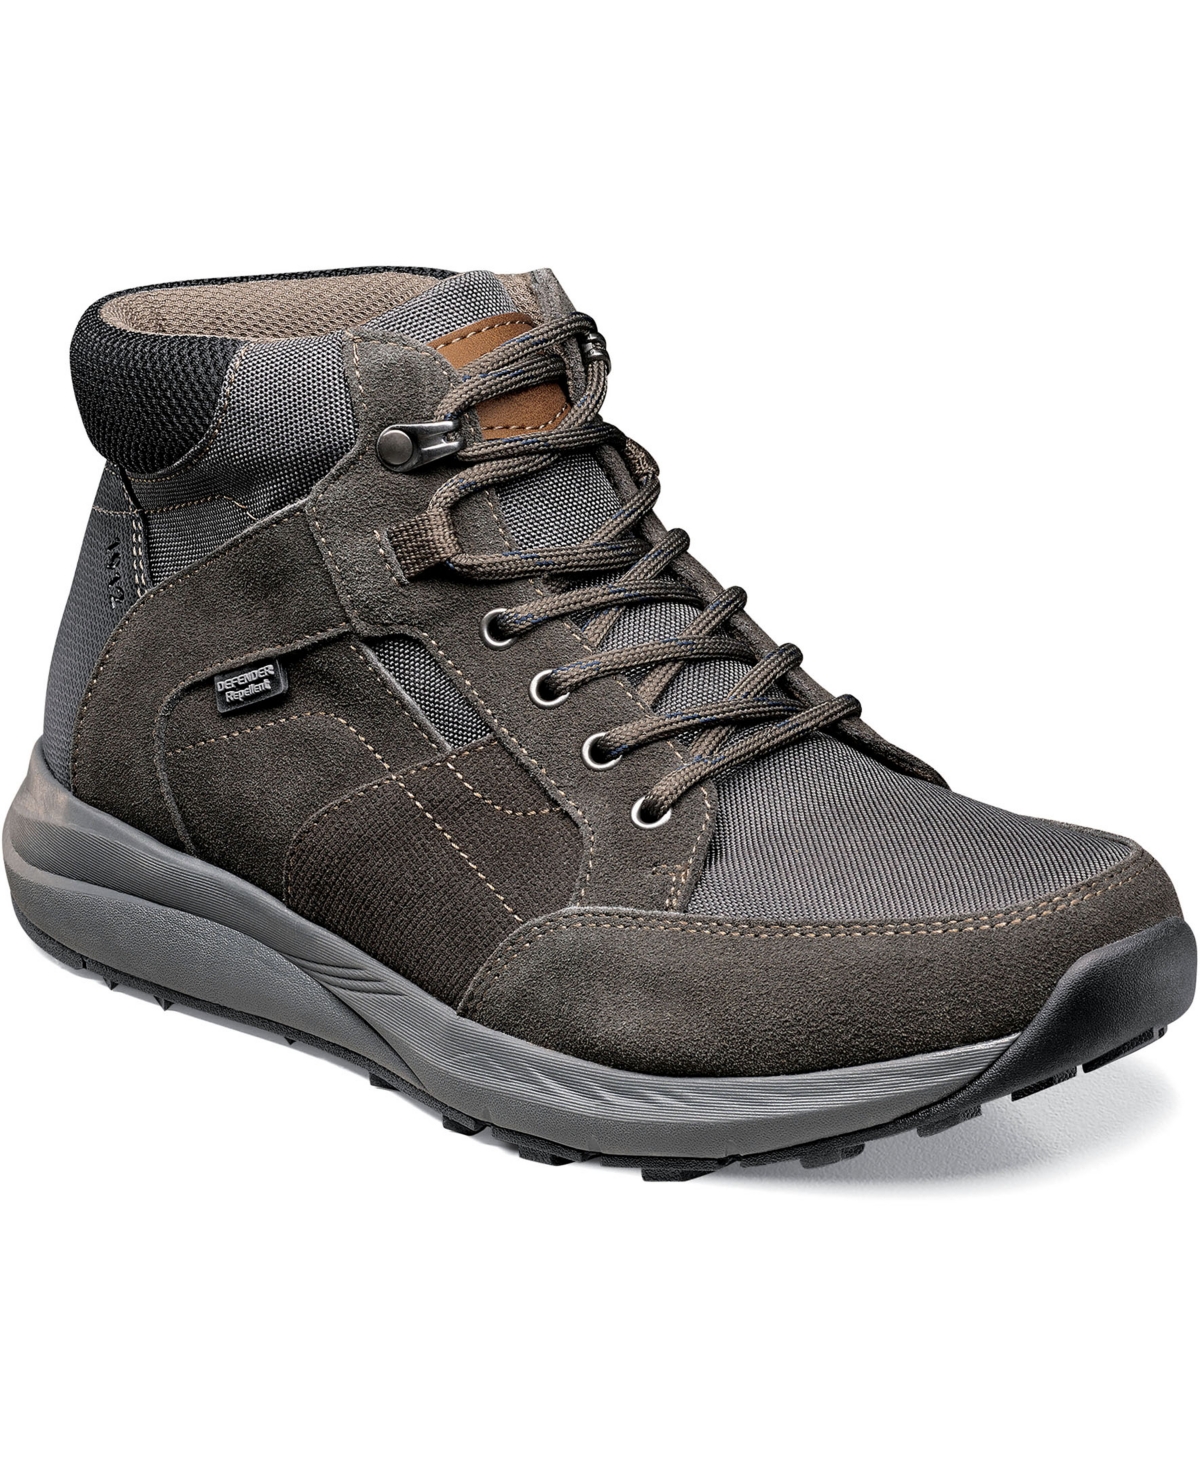 Men's Excursion Lite Moc Toe Chukka Boots - Gray Multi